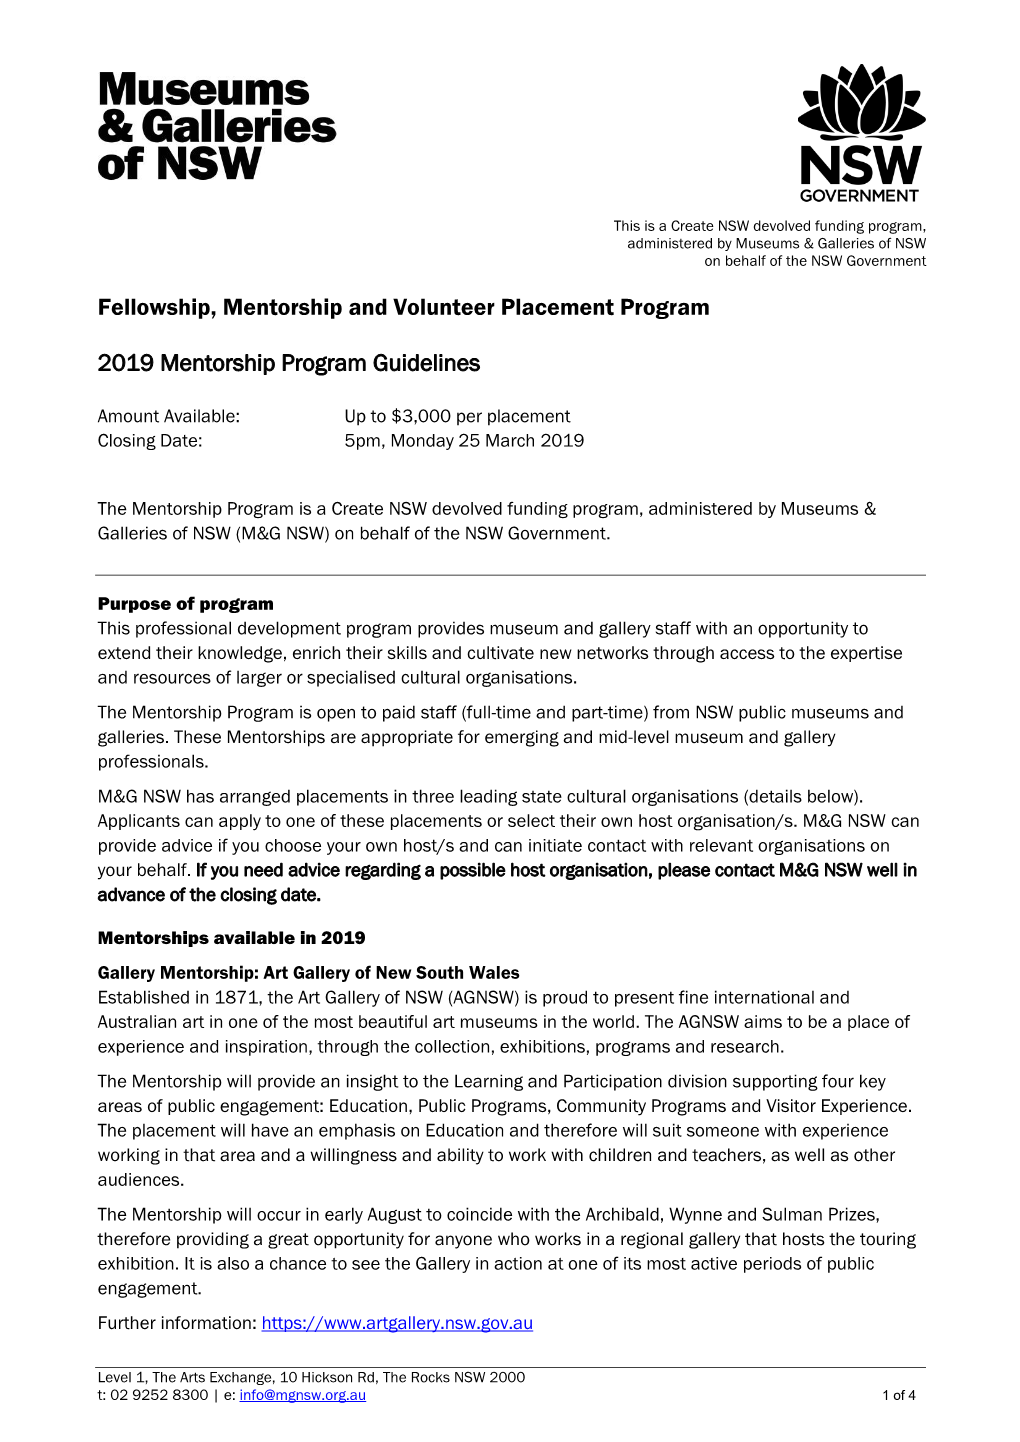 Fellowship, Mentorship and Volunteer Placement Program 2019 Mentorship Program Guidelines